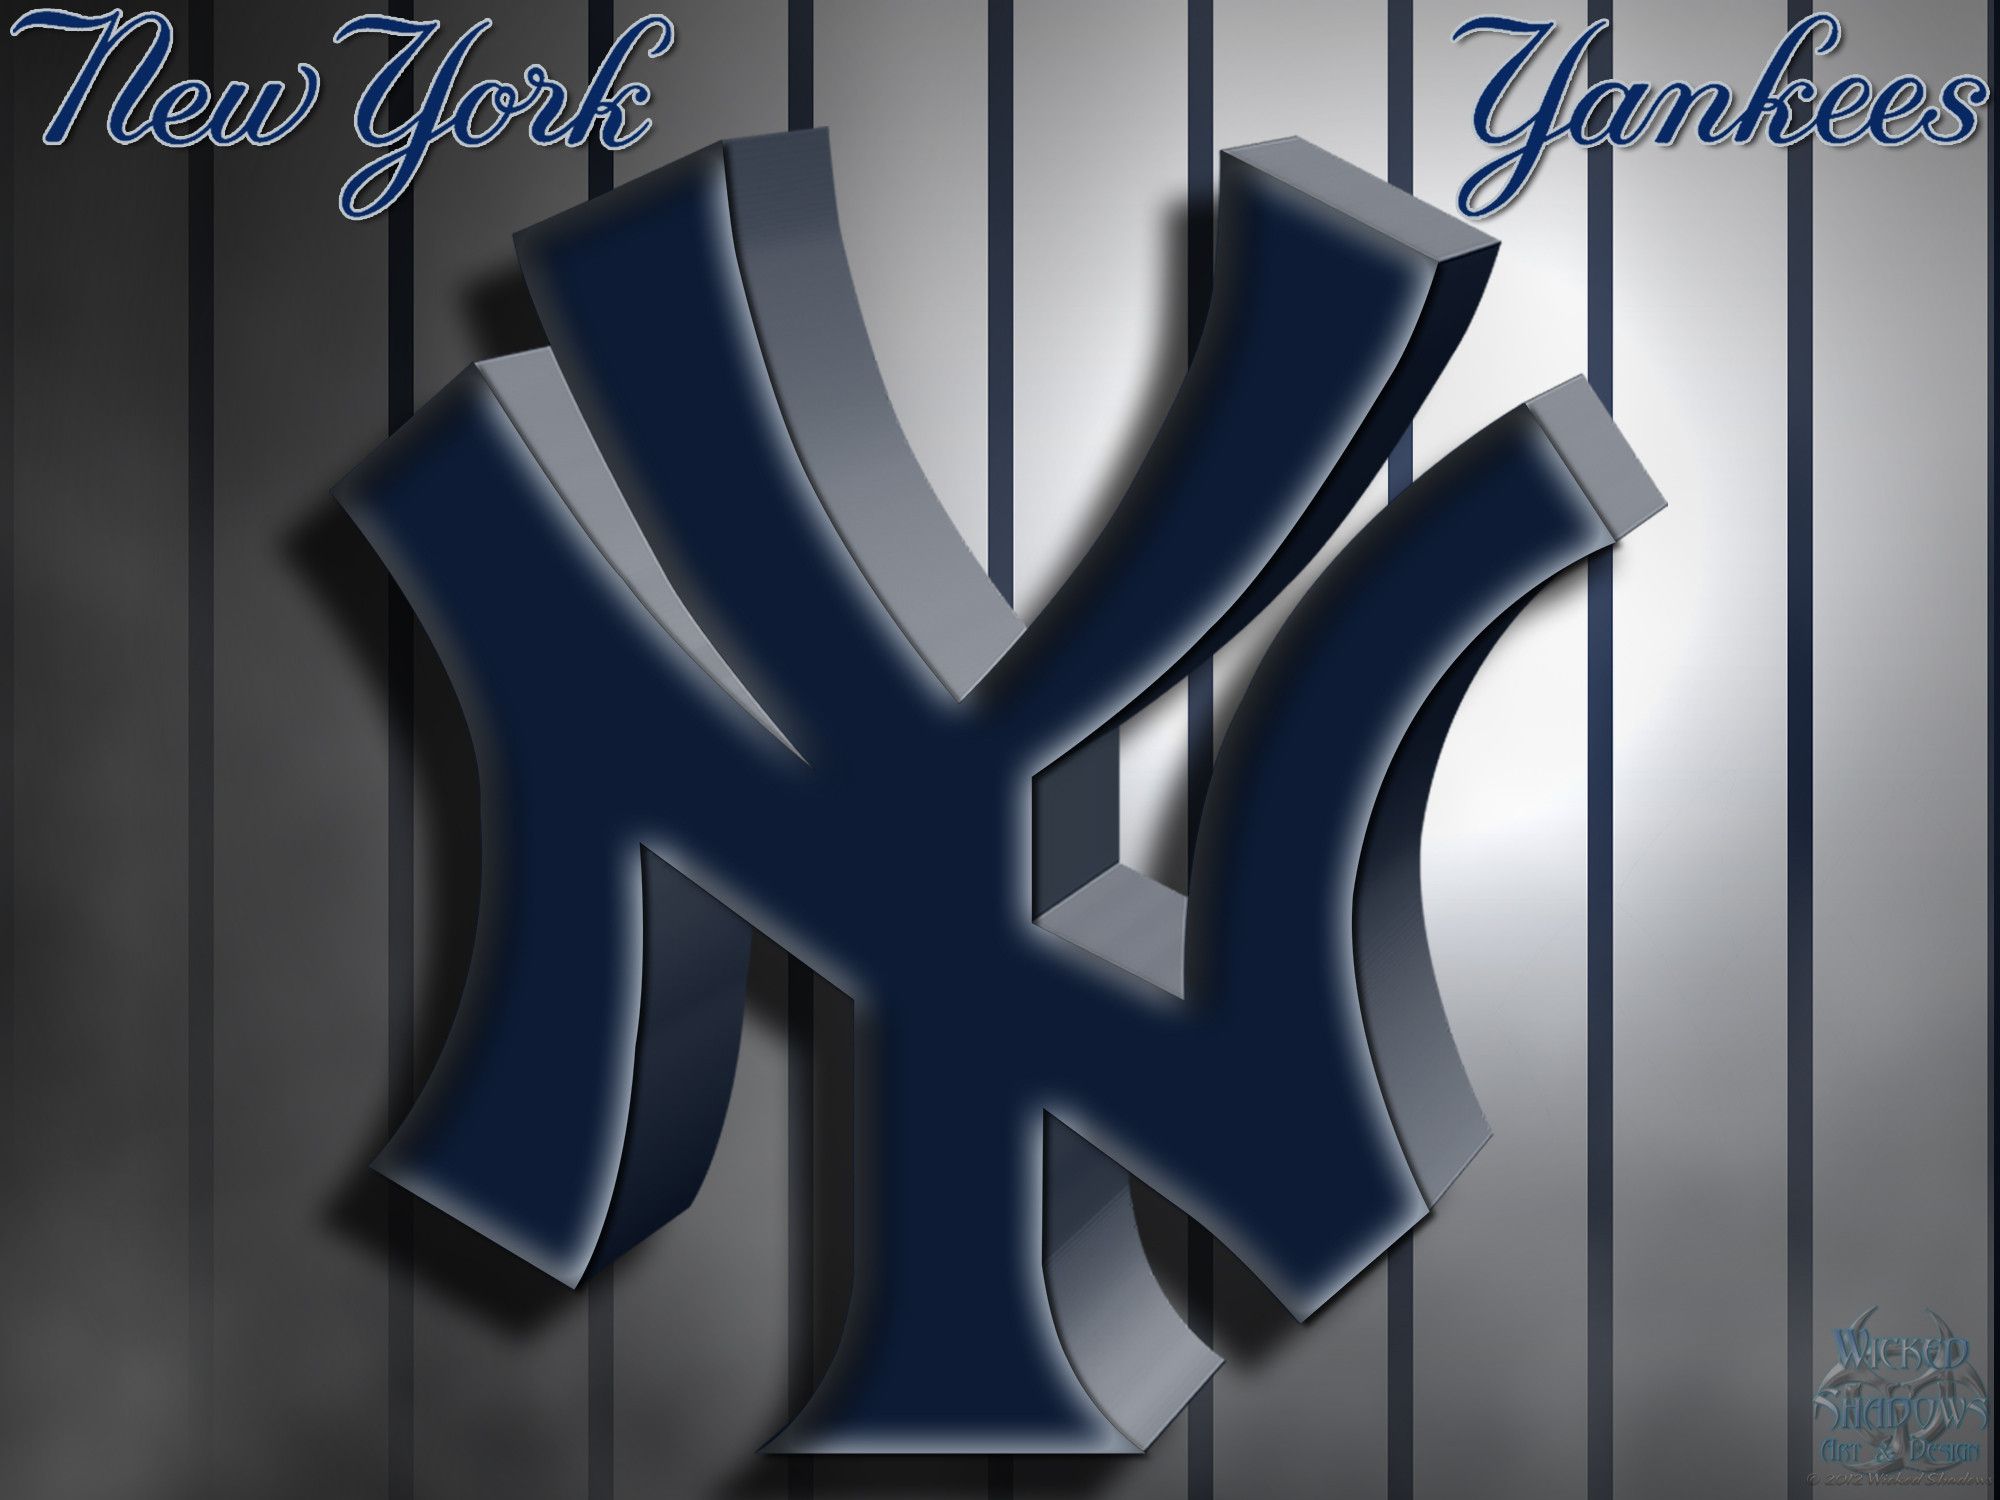 47 New York Yankee Wallpaper ideas